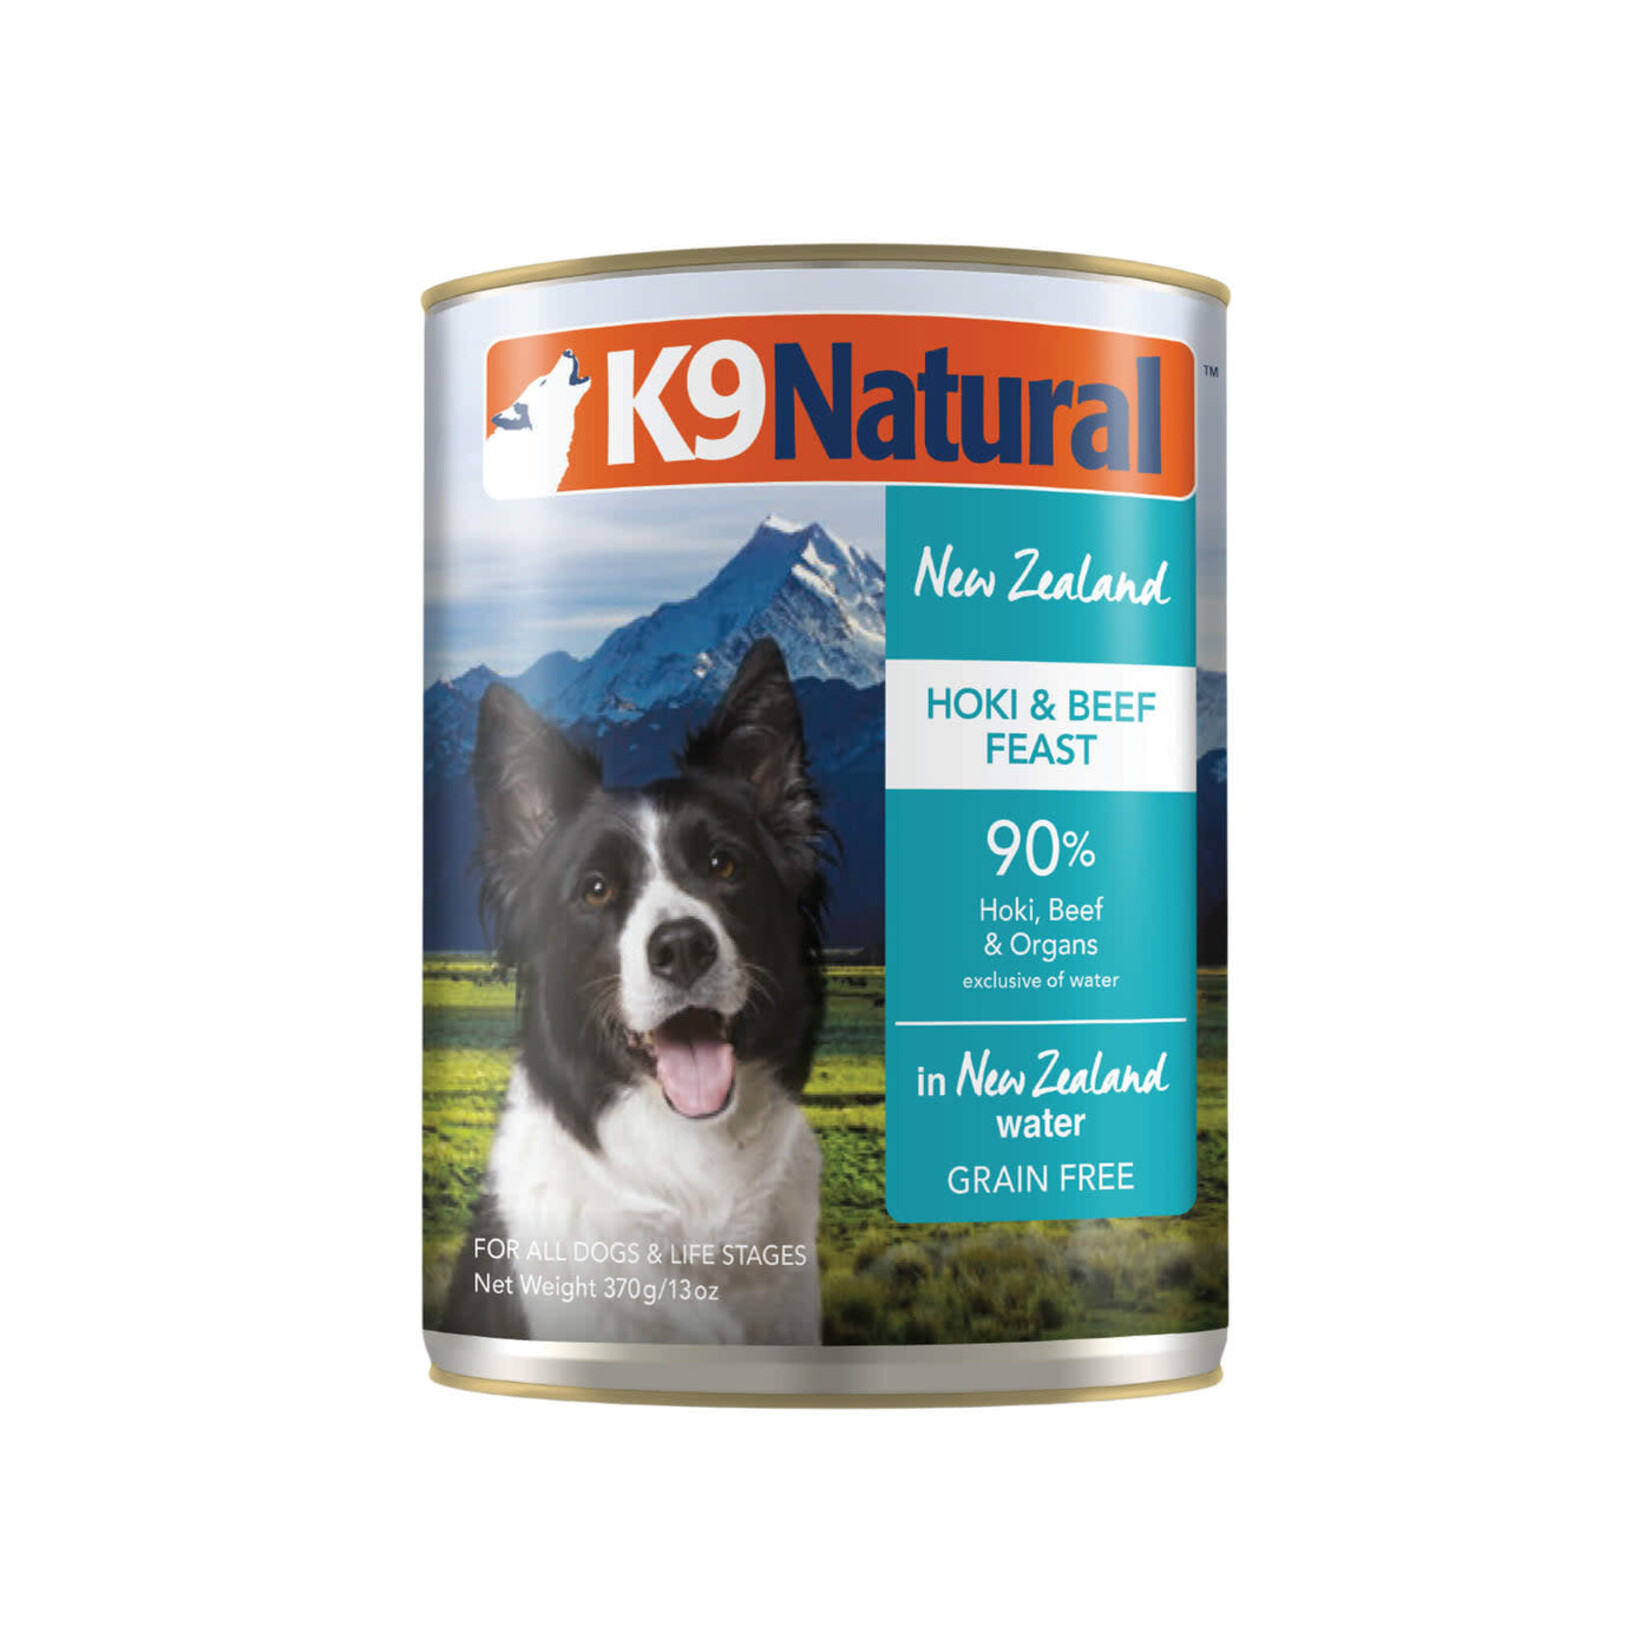 K9 Natural K9 Natural Hoki and Beef Feast Canned Grain Free Dog Food 13oz